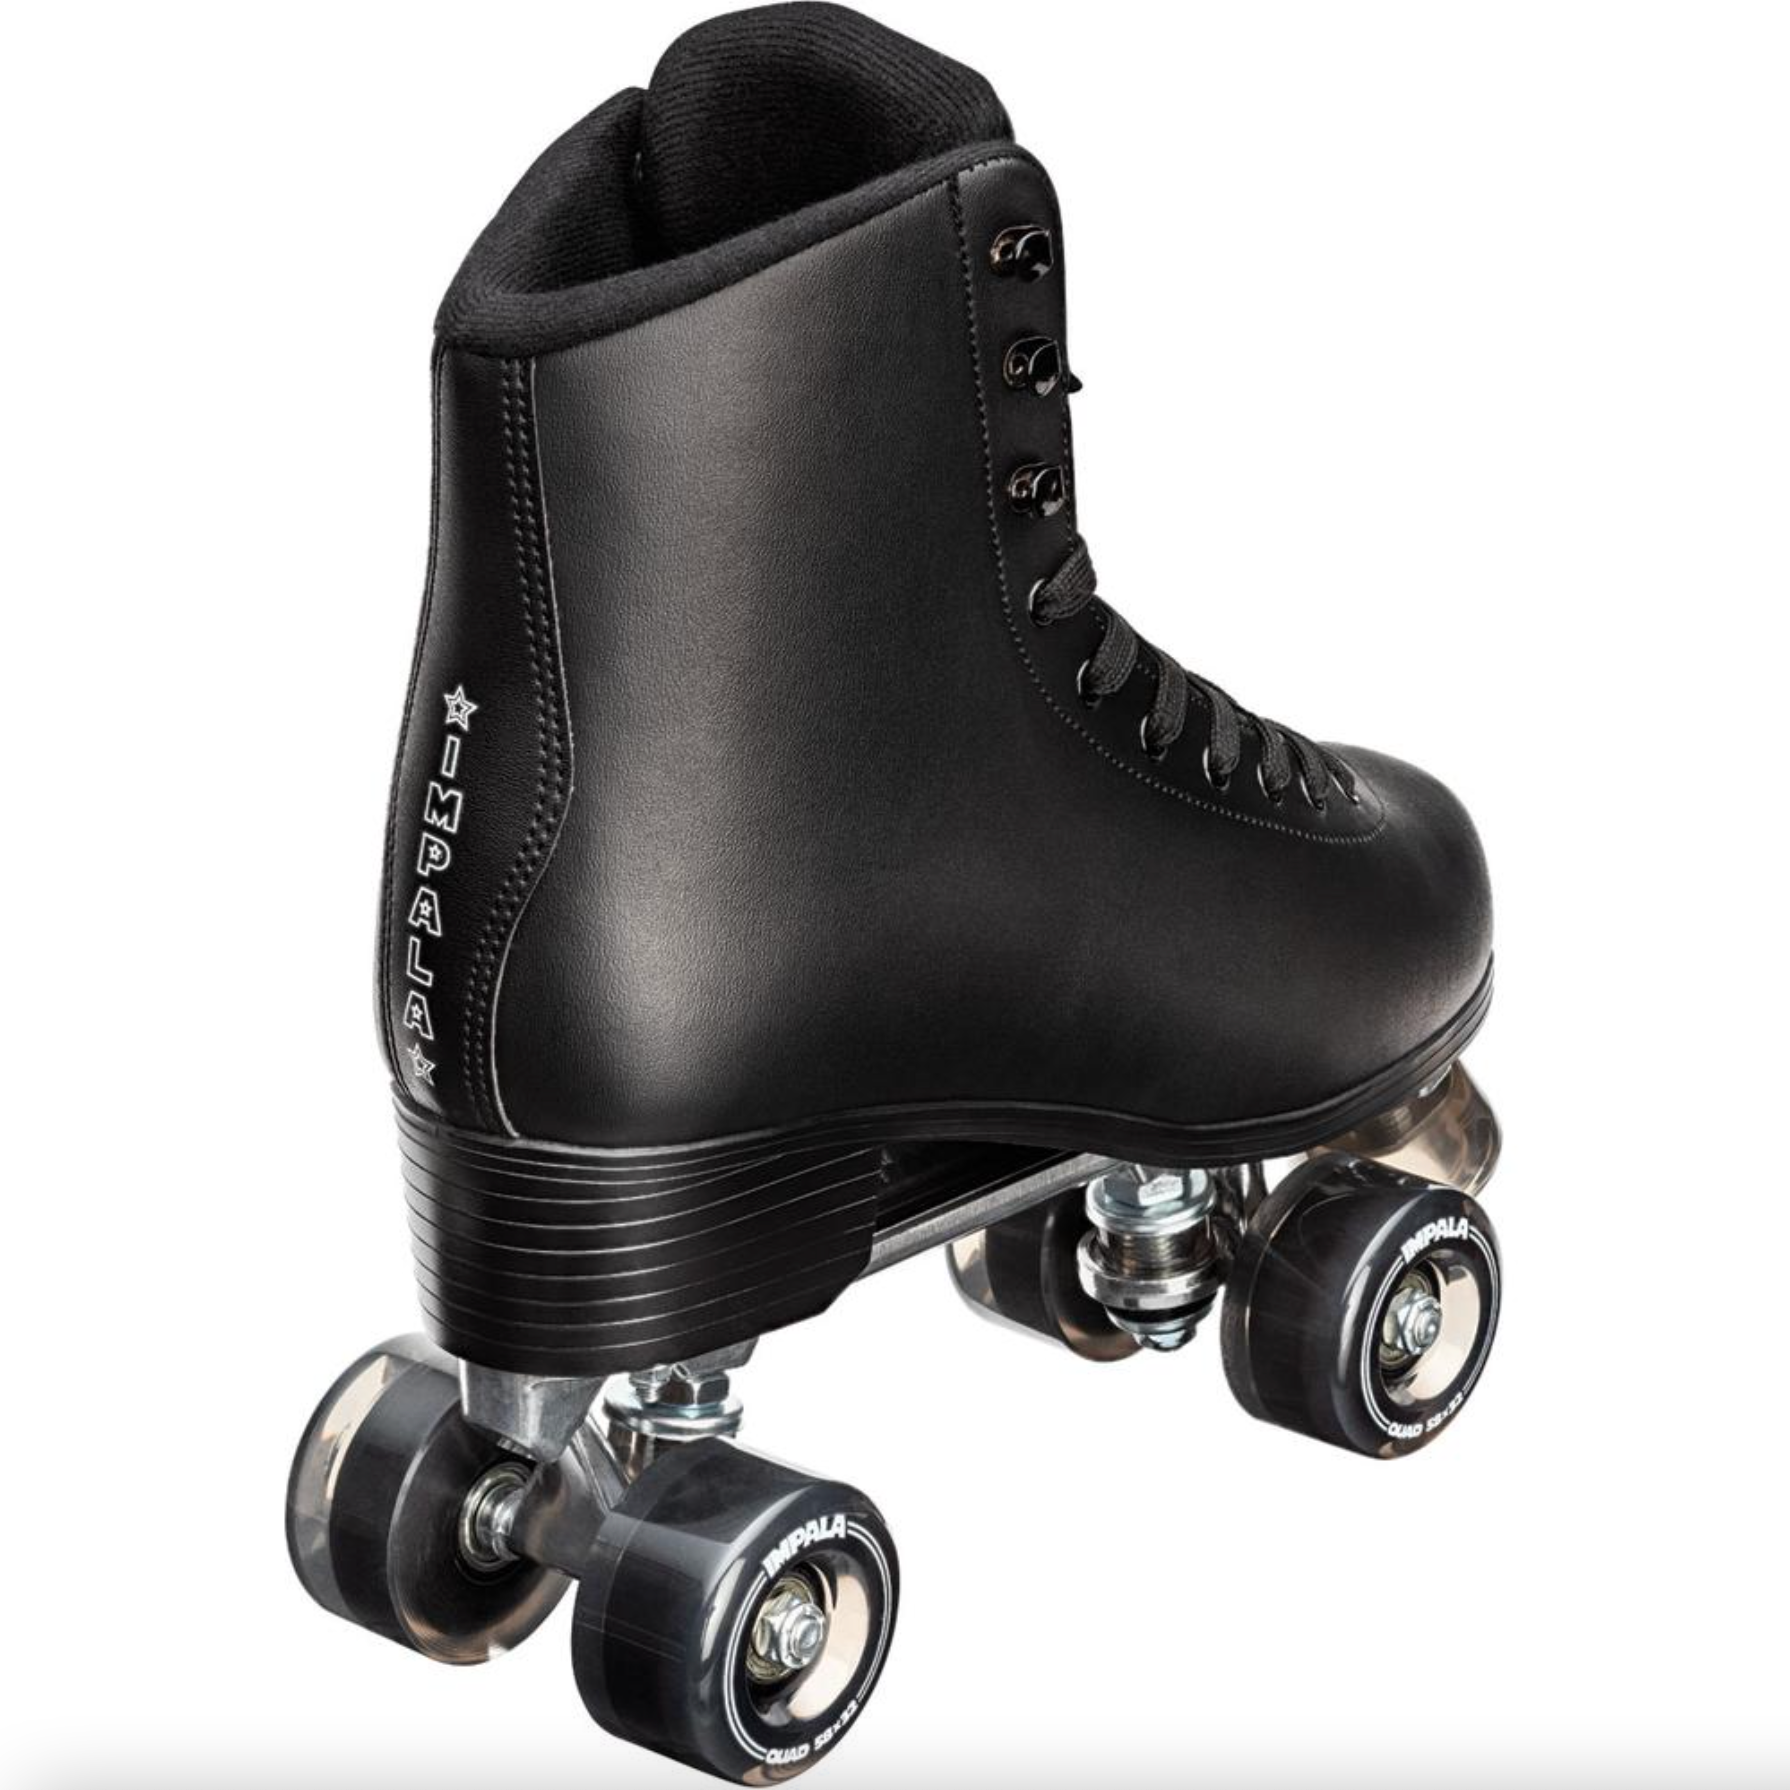 Impala Black roller skates